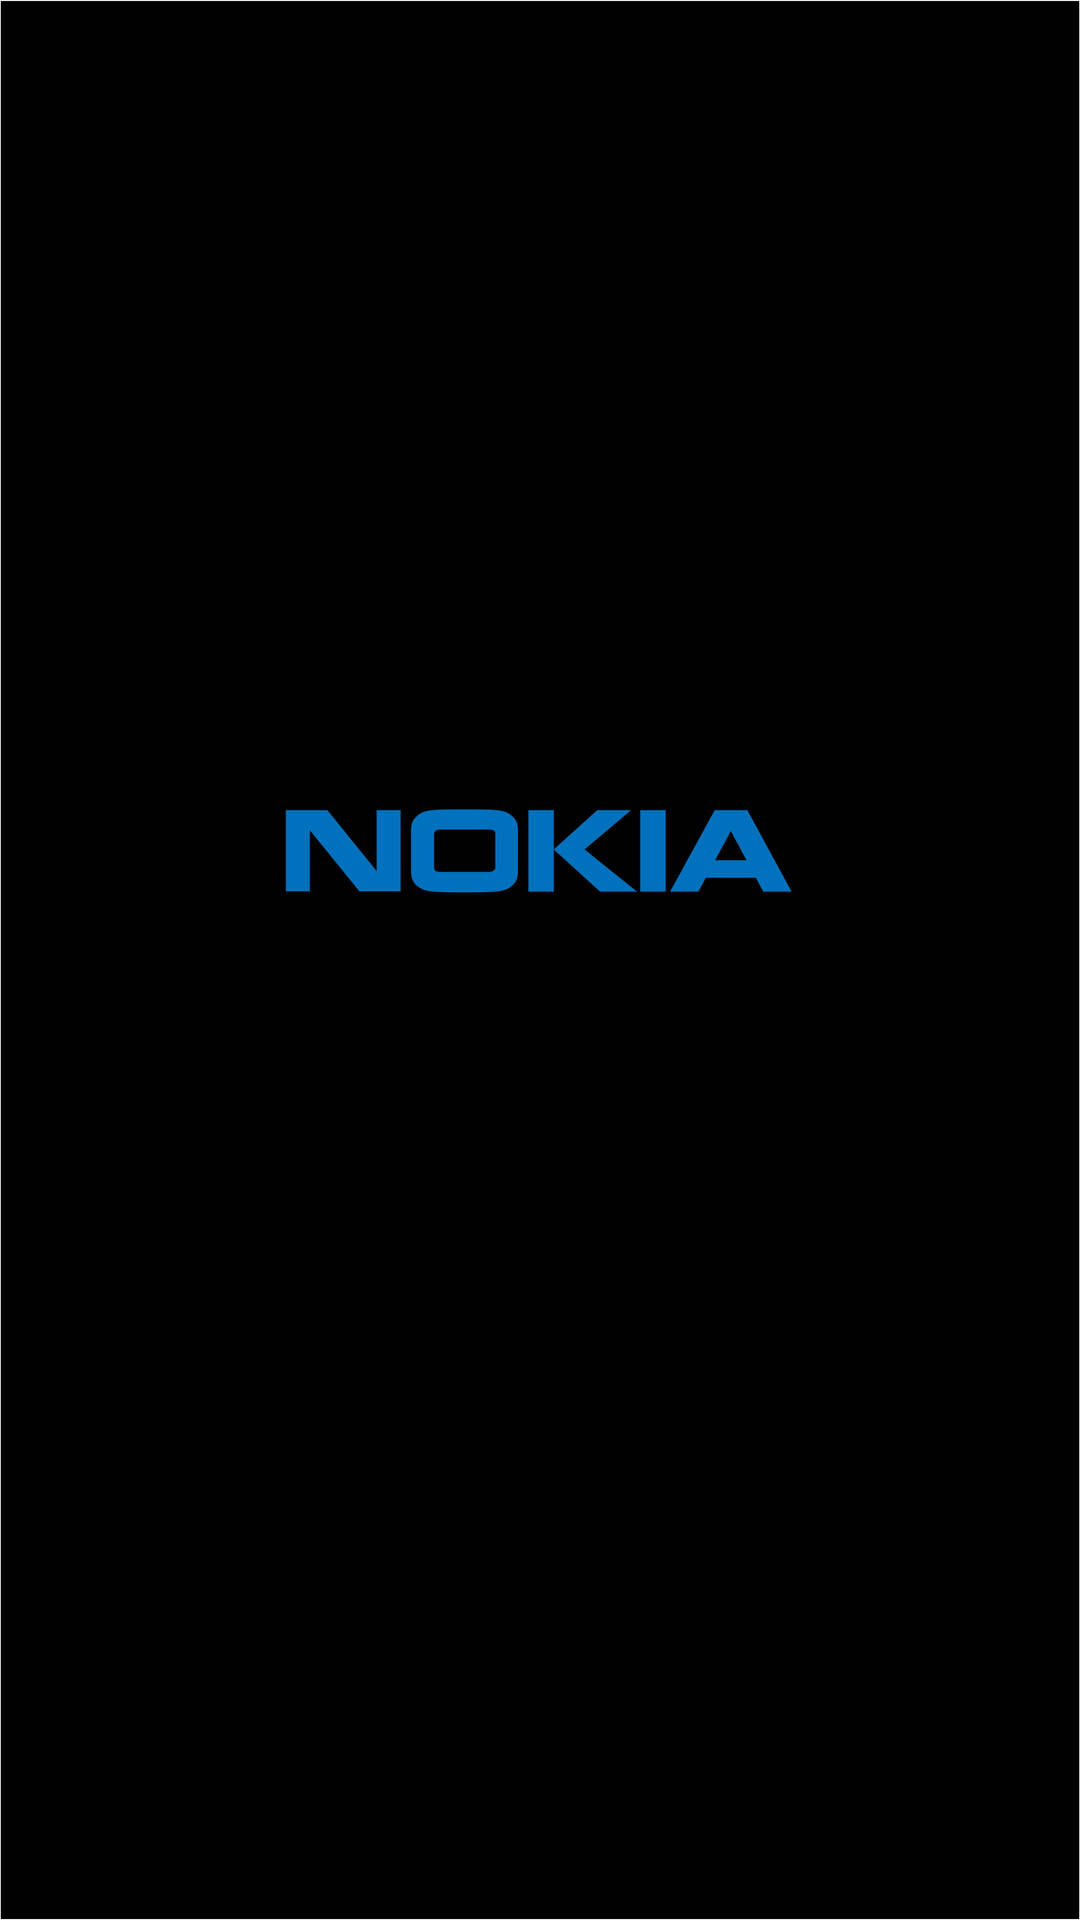 Nokia Wordmark Logo 8k Phone Background